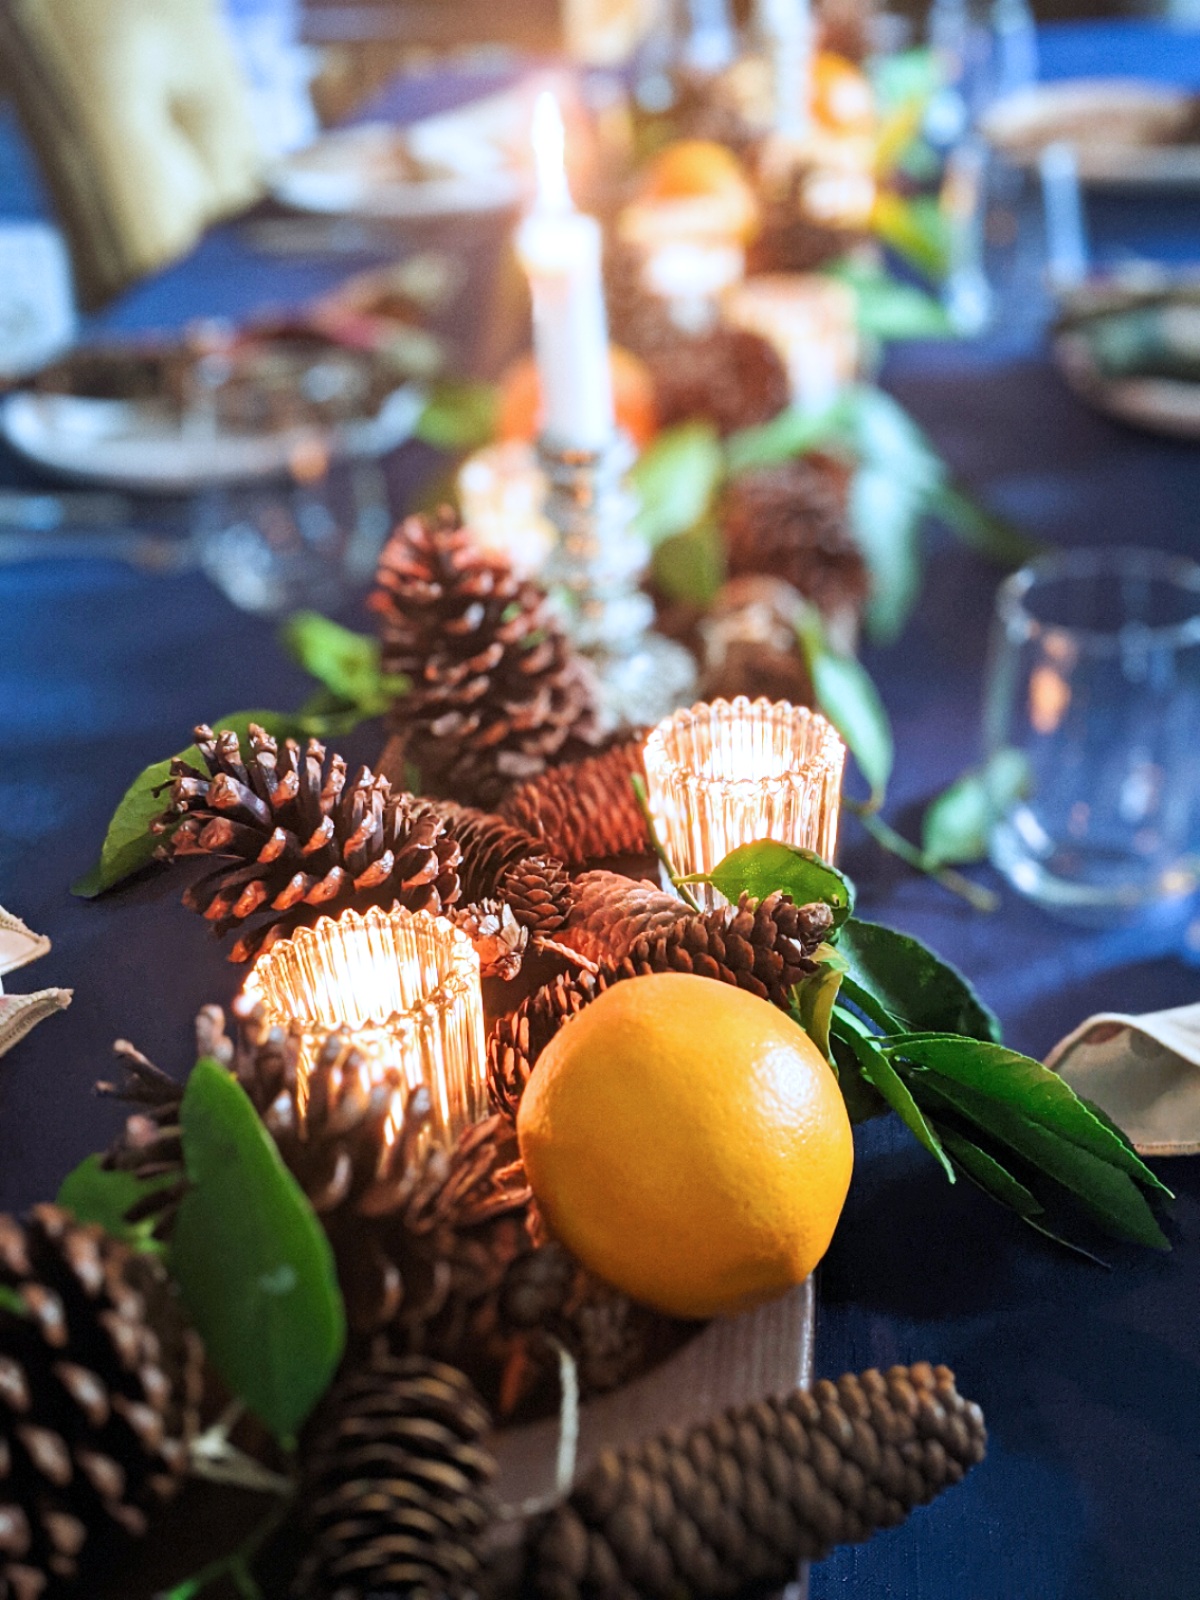 CAD Interiors dining table setting holidays fruit lemons pinecones pine garland candles natural